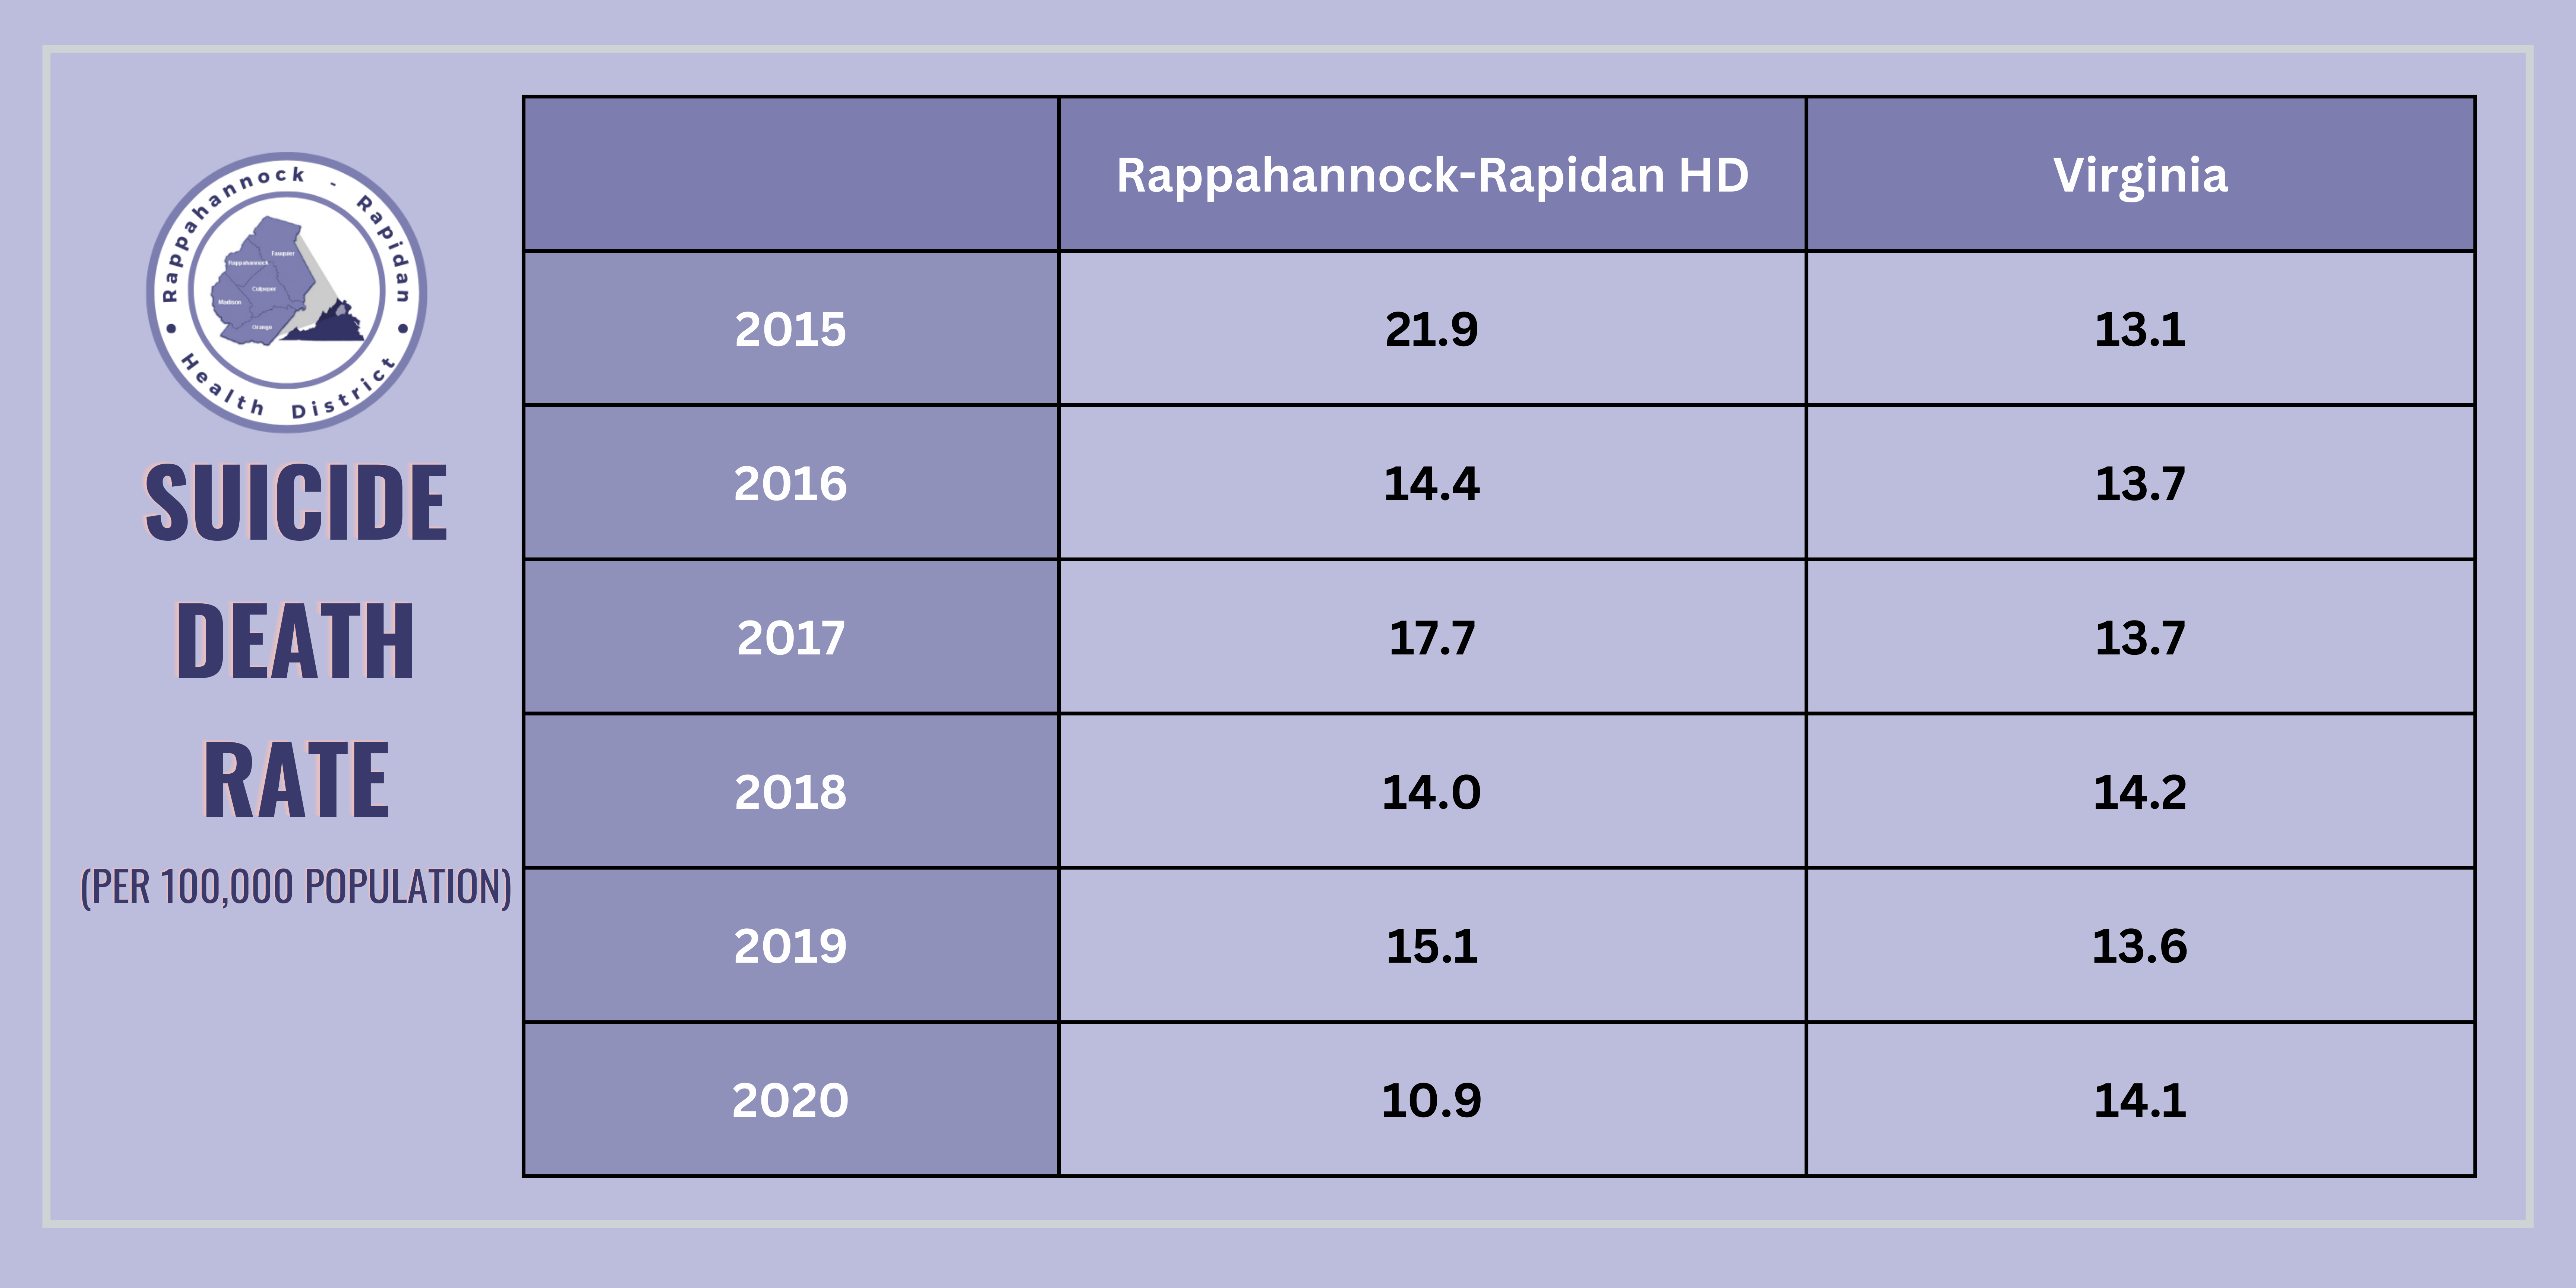 Suicide Death Rate (per 100,000 population) Table
In 2020:
RRHD - 10.9 
Virgina - 14.1 